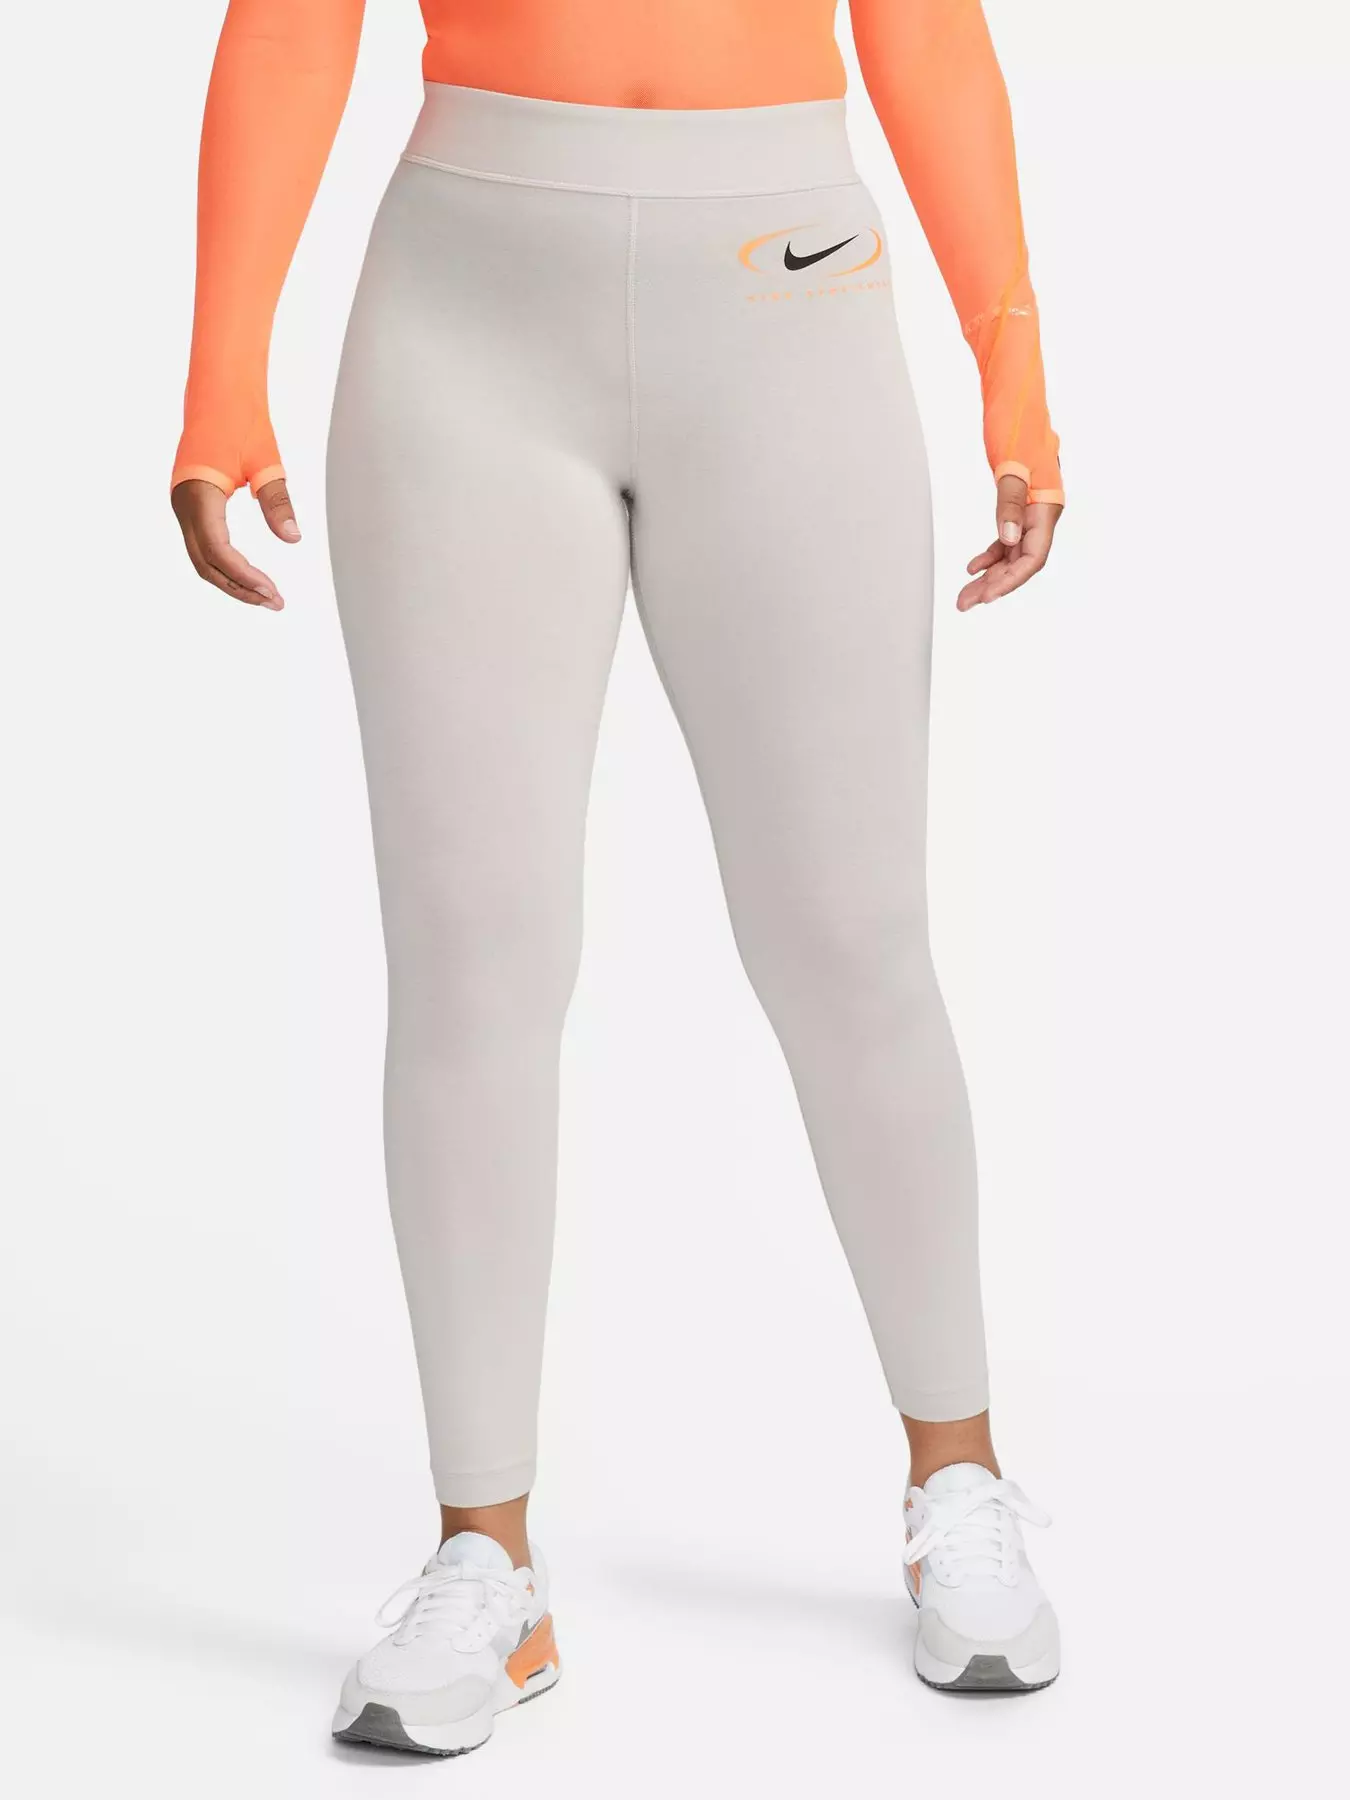 Size 26-28, Nike Pro Legging Short Volleyball/Yoga Black, Women's Fashion,  Activewear on Carousell